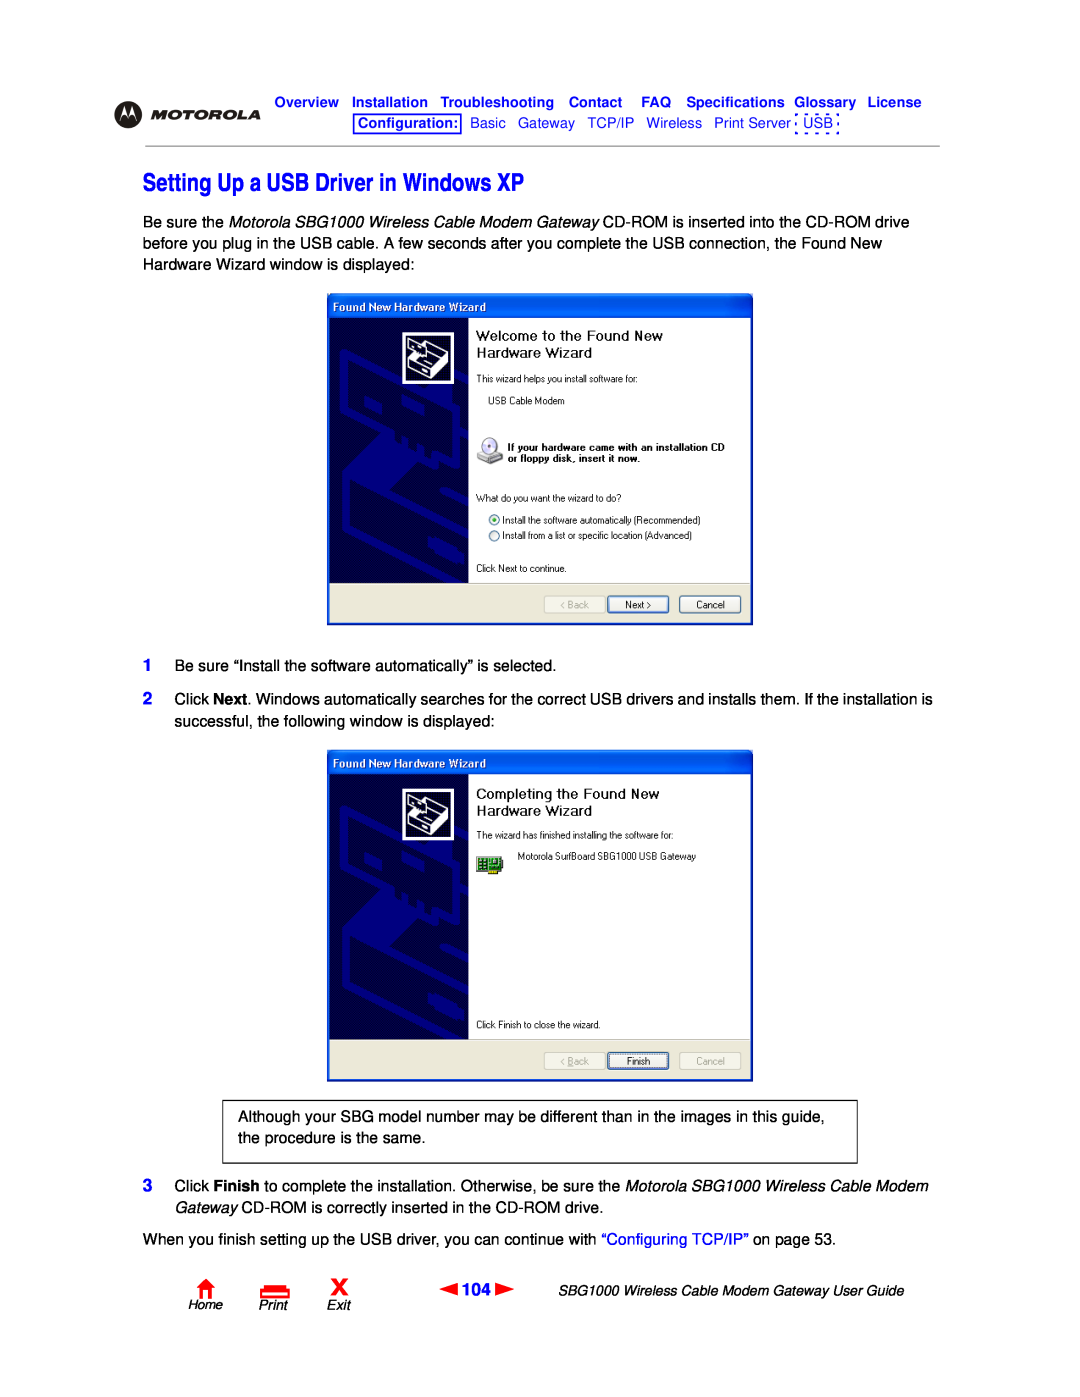 Motorola SBG1000 manual Setting Up a USB Driver in Windows XP 